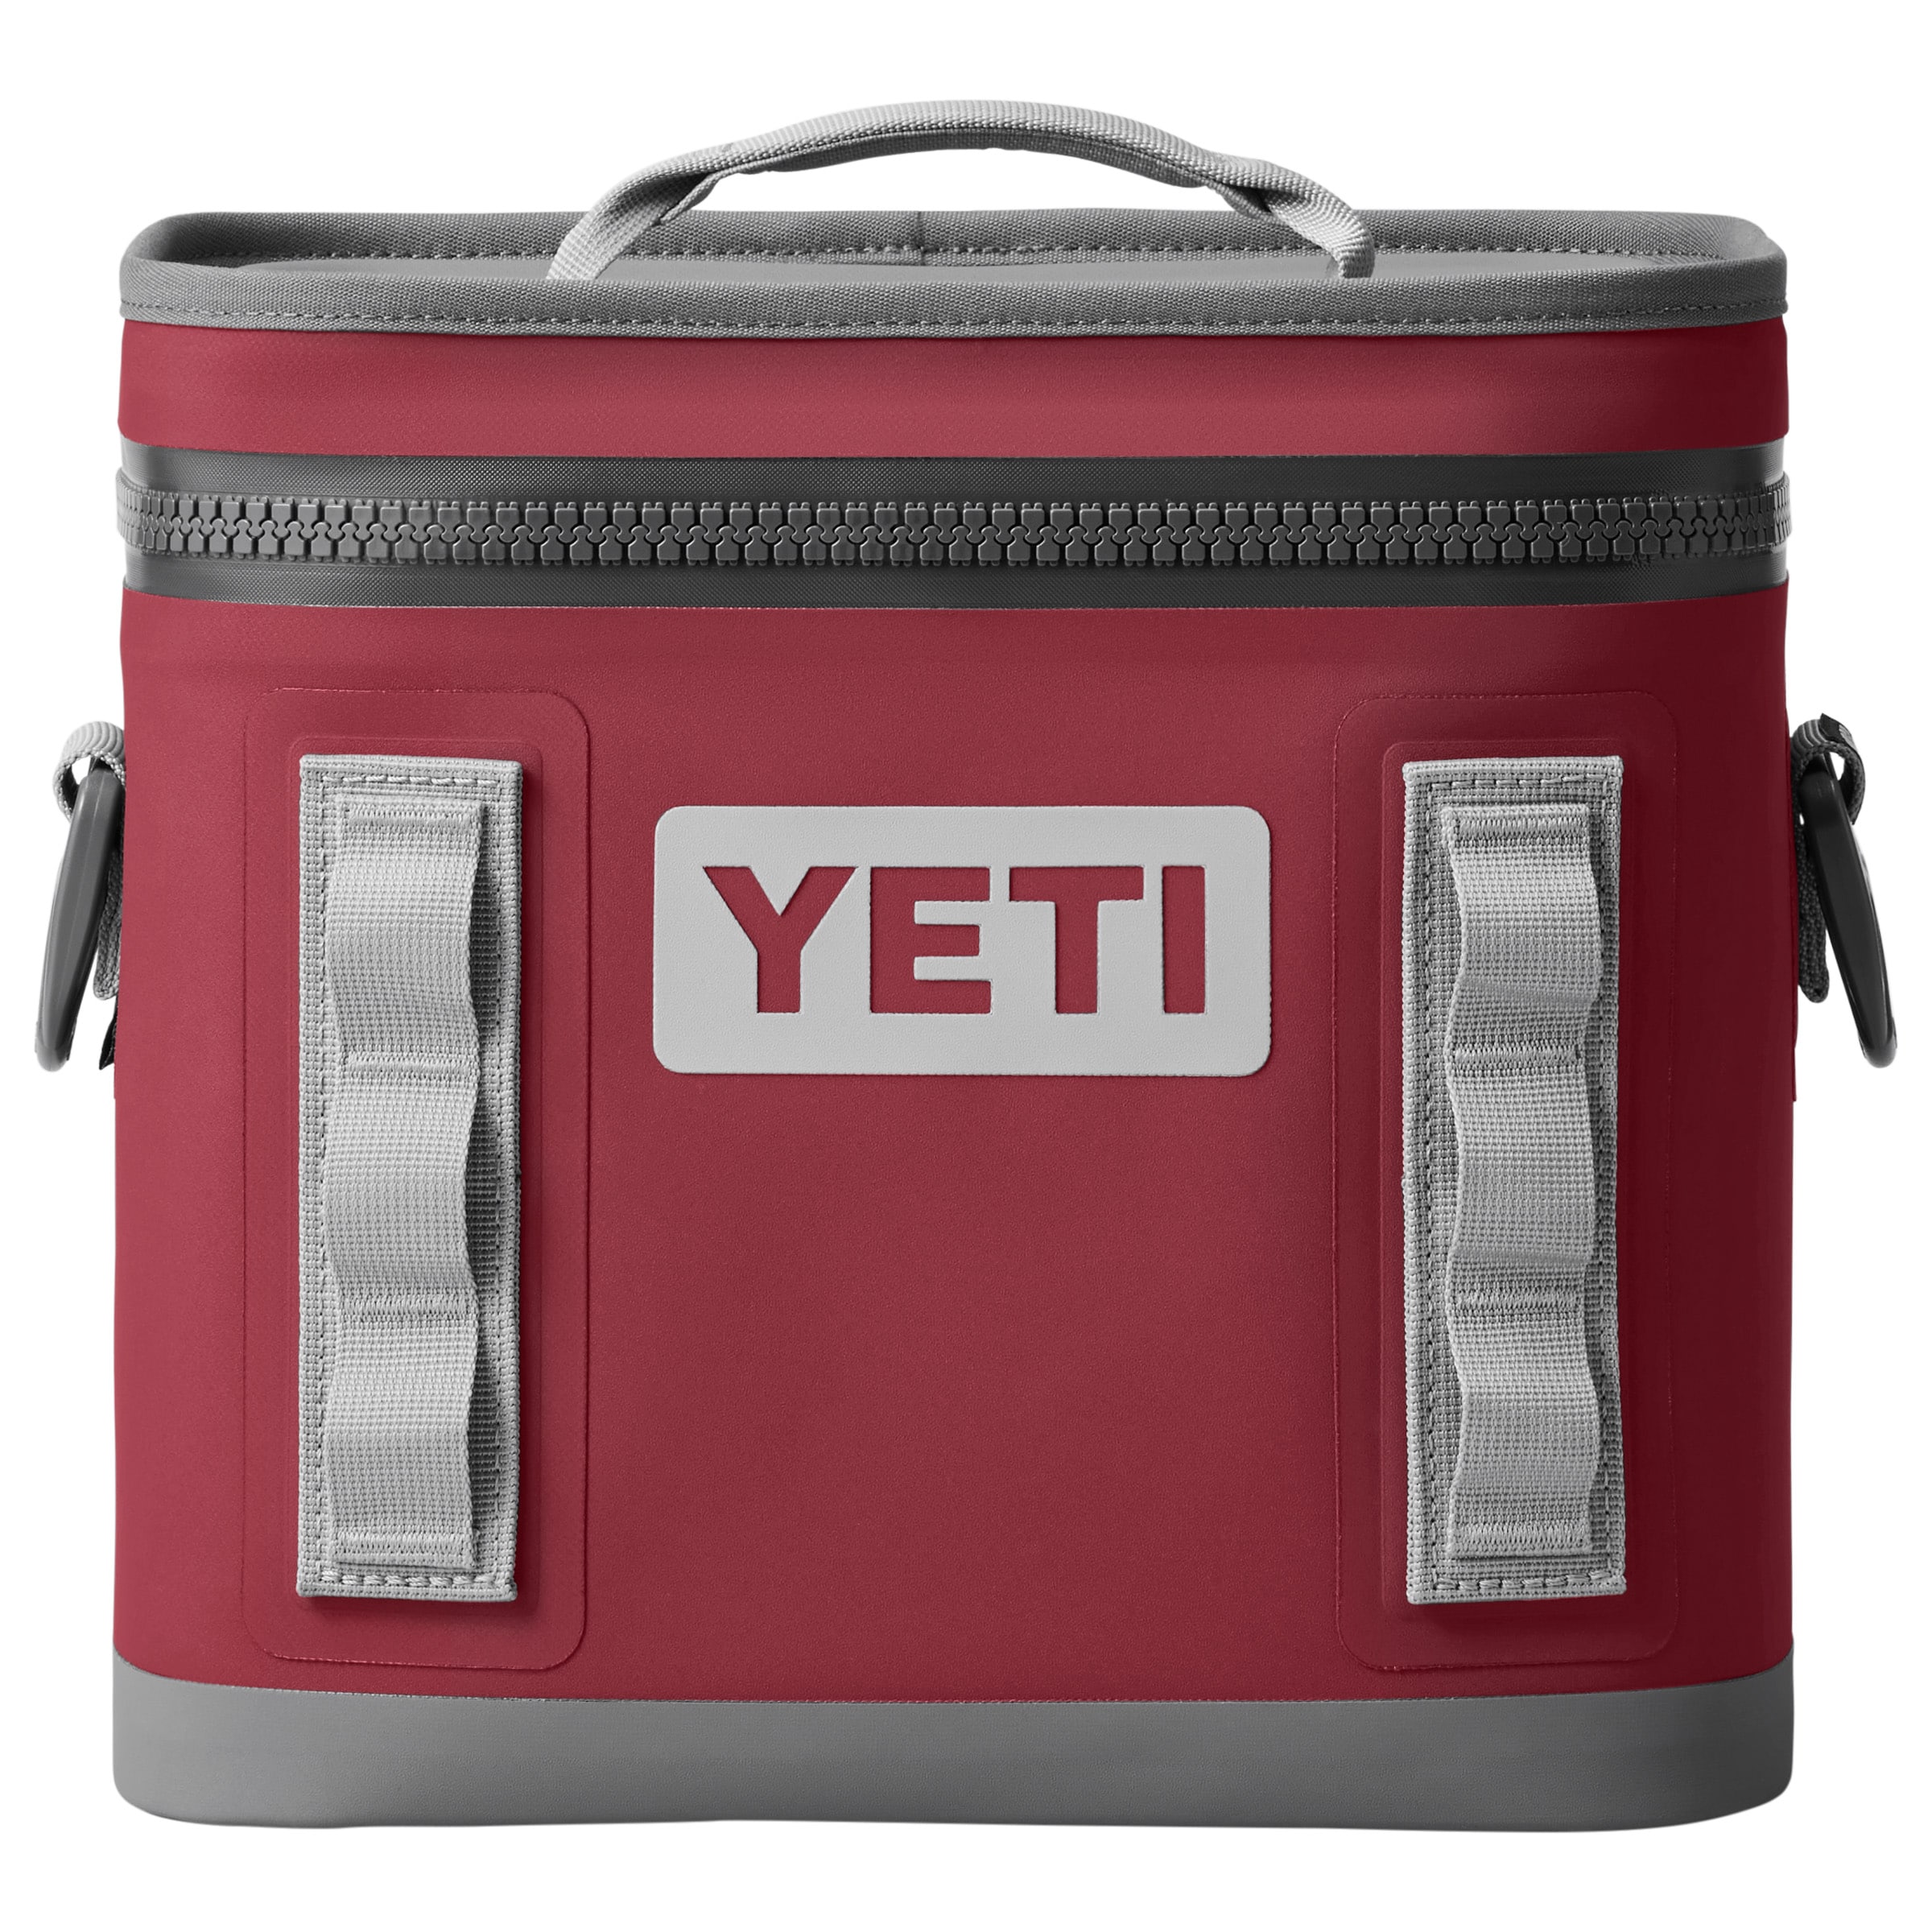 Texas Tech Red Raiders - Pranzo Lunch Cooler Bag, 12 x 8 x 11